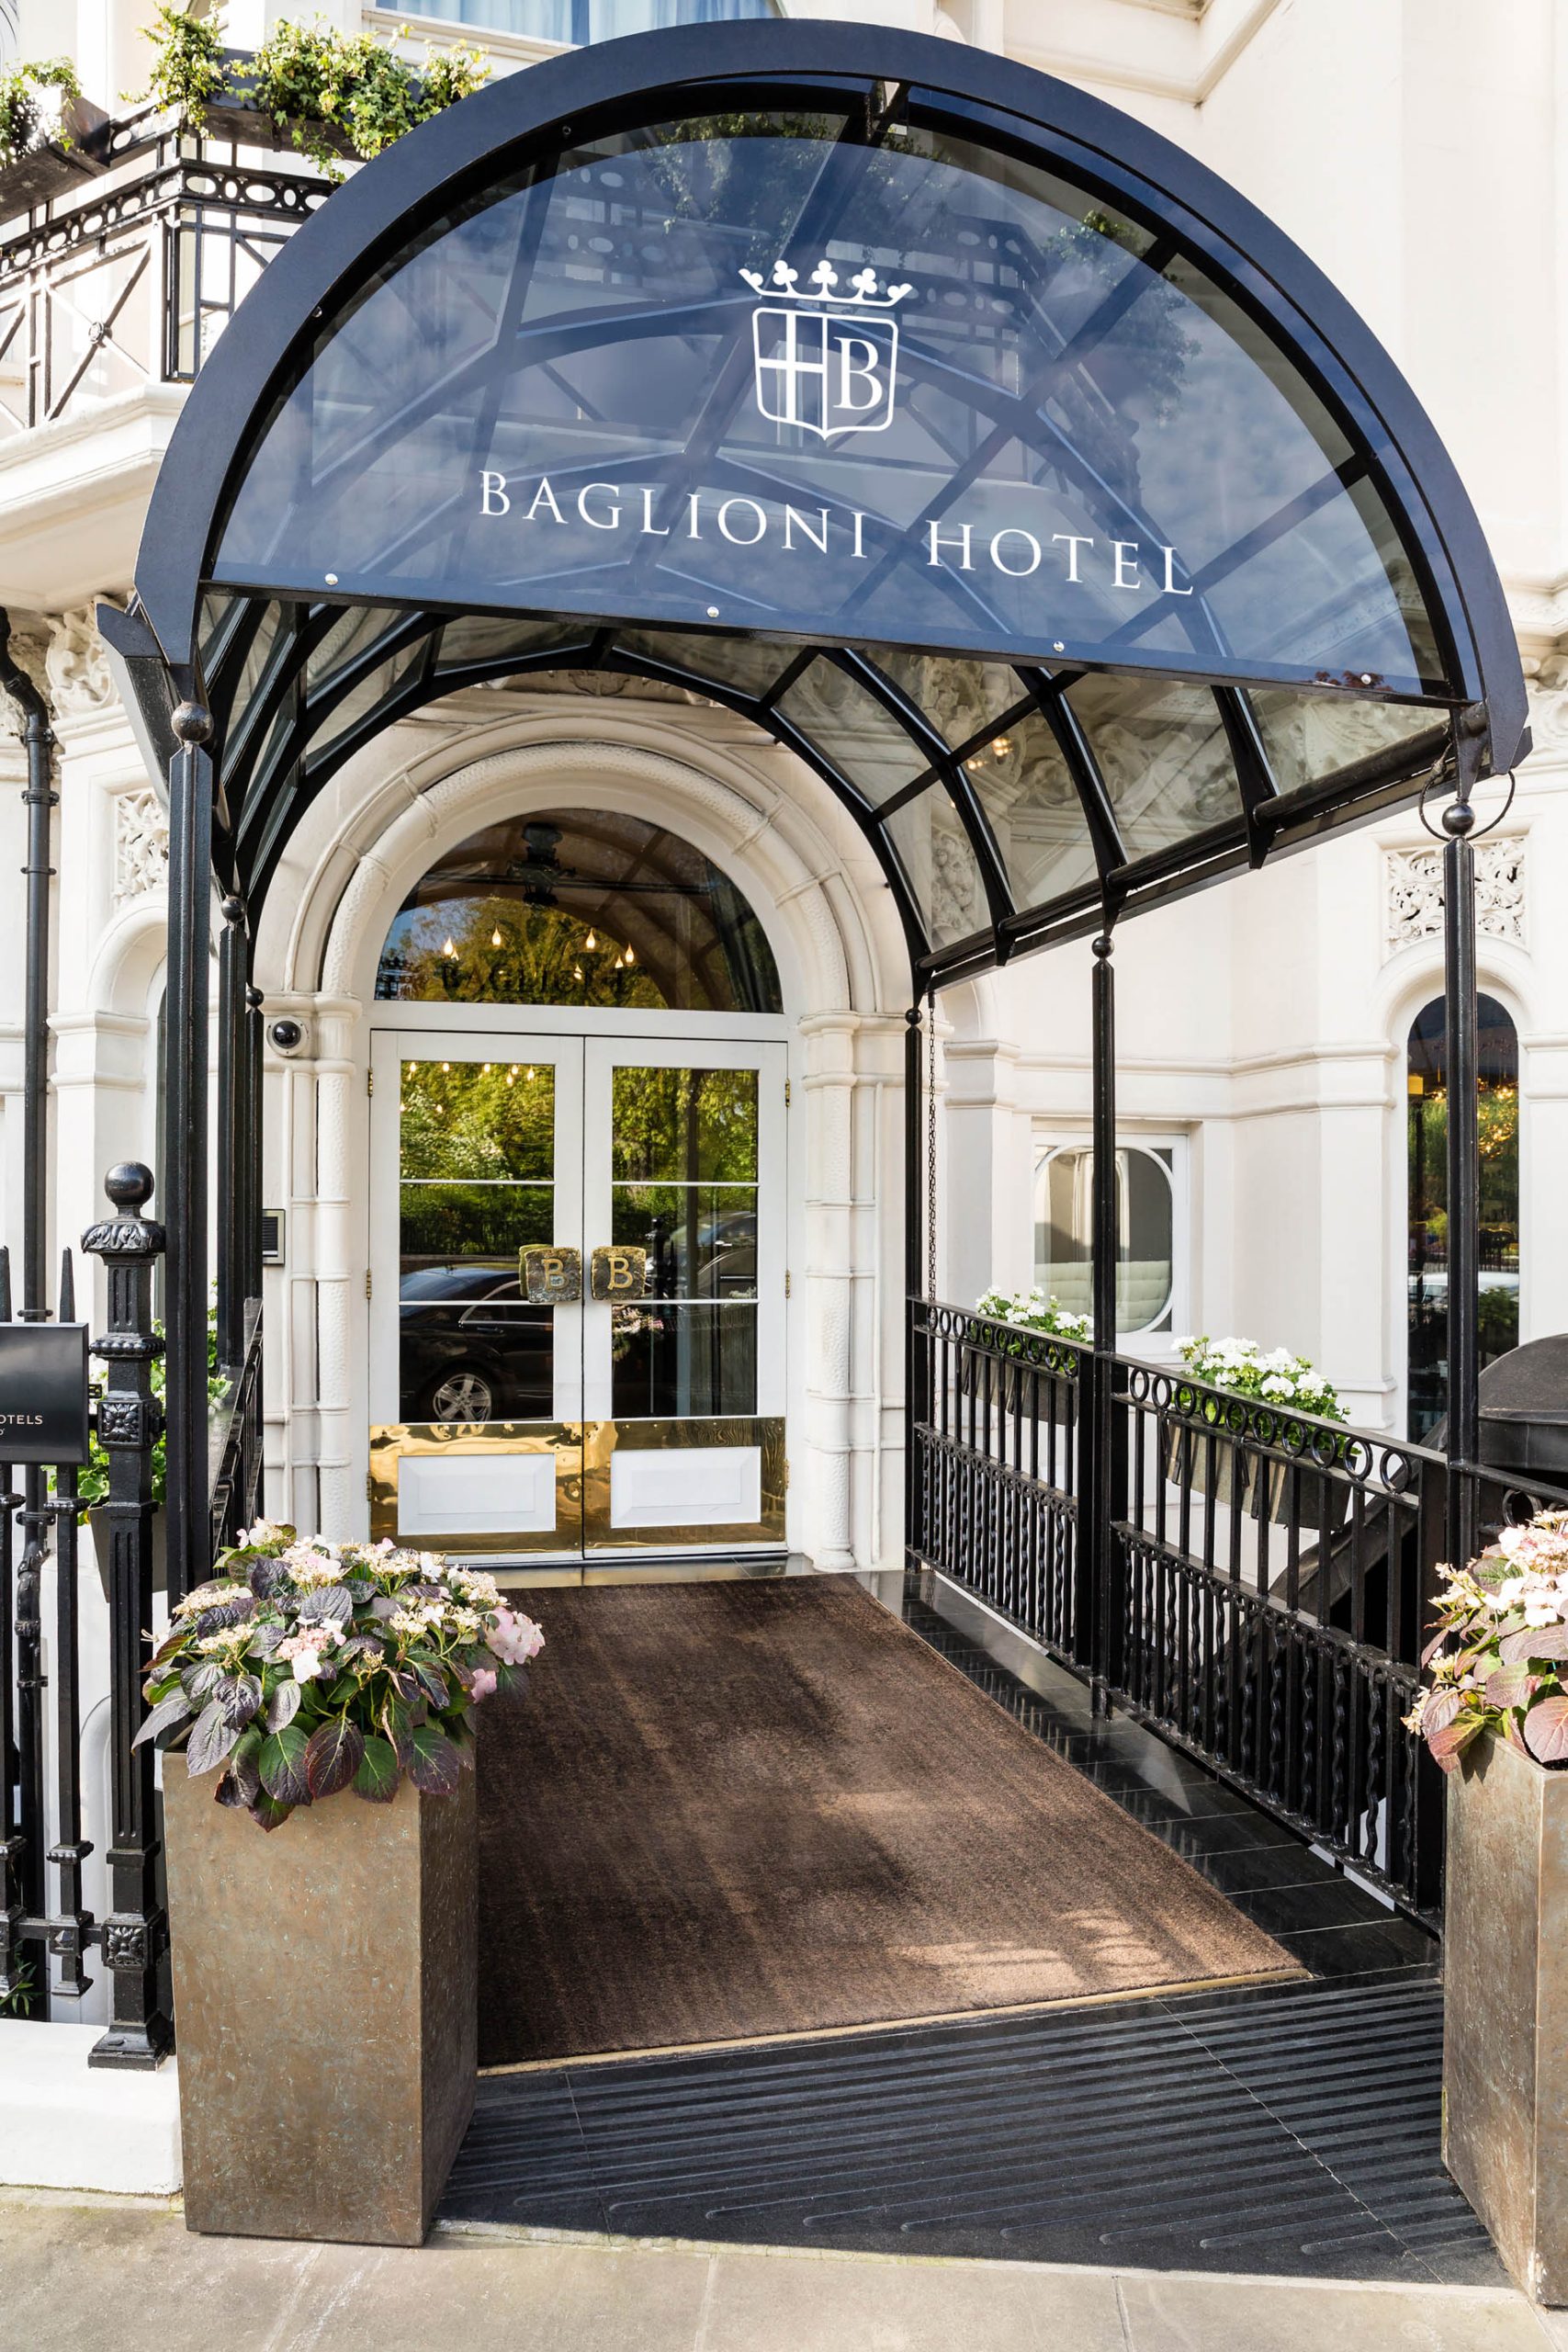 Baglioni Hotel London – South Kensington, London, United Kingdom – Entrance